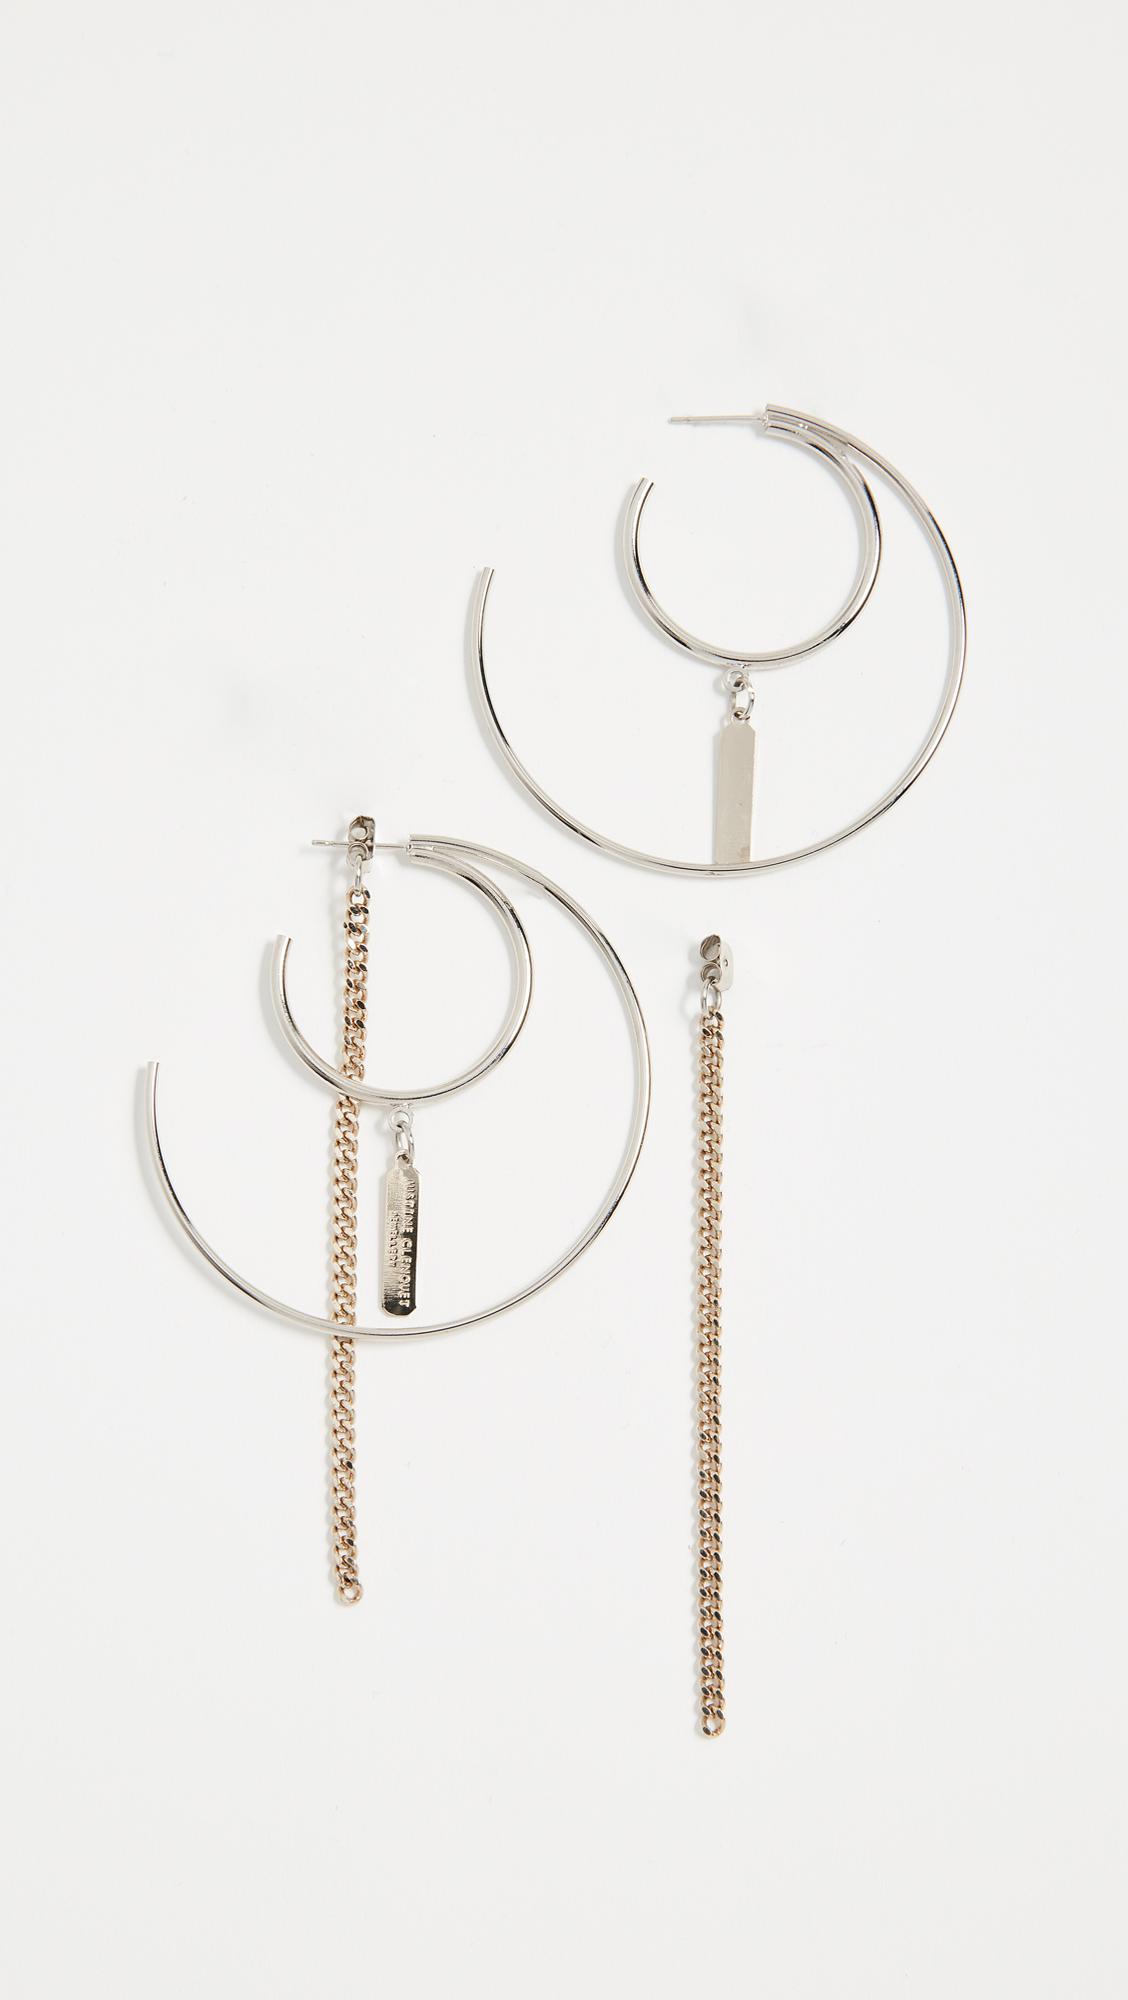 Justine Clenquet Ali Earrings in Metallic - Lyst